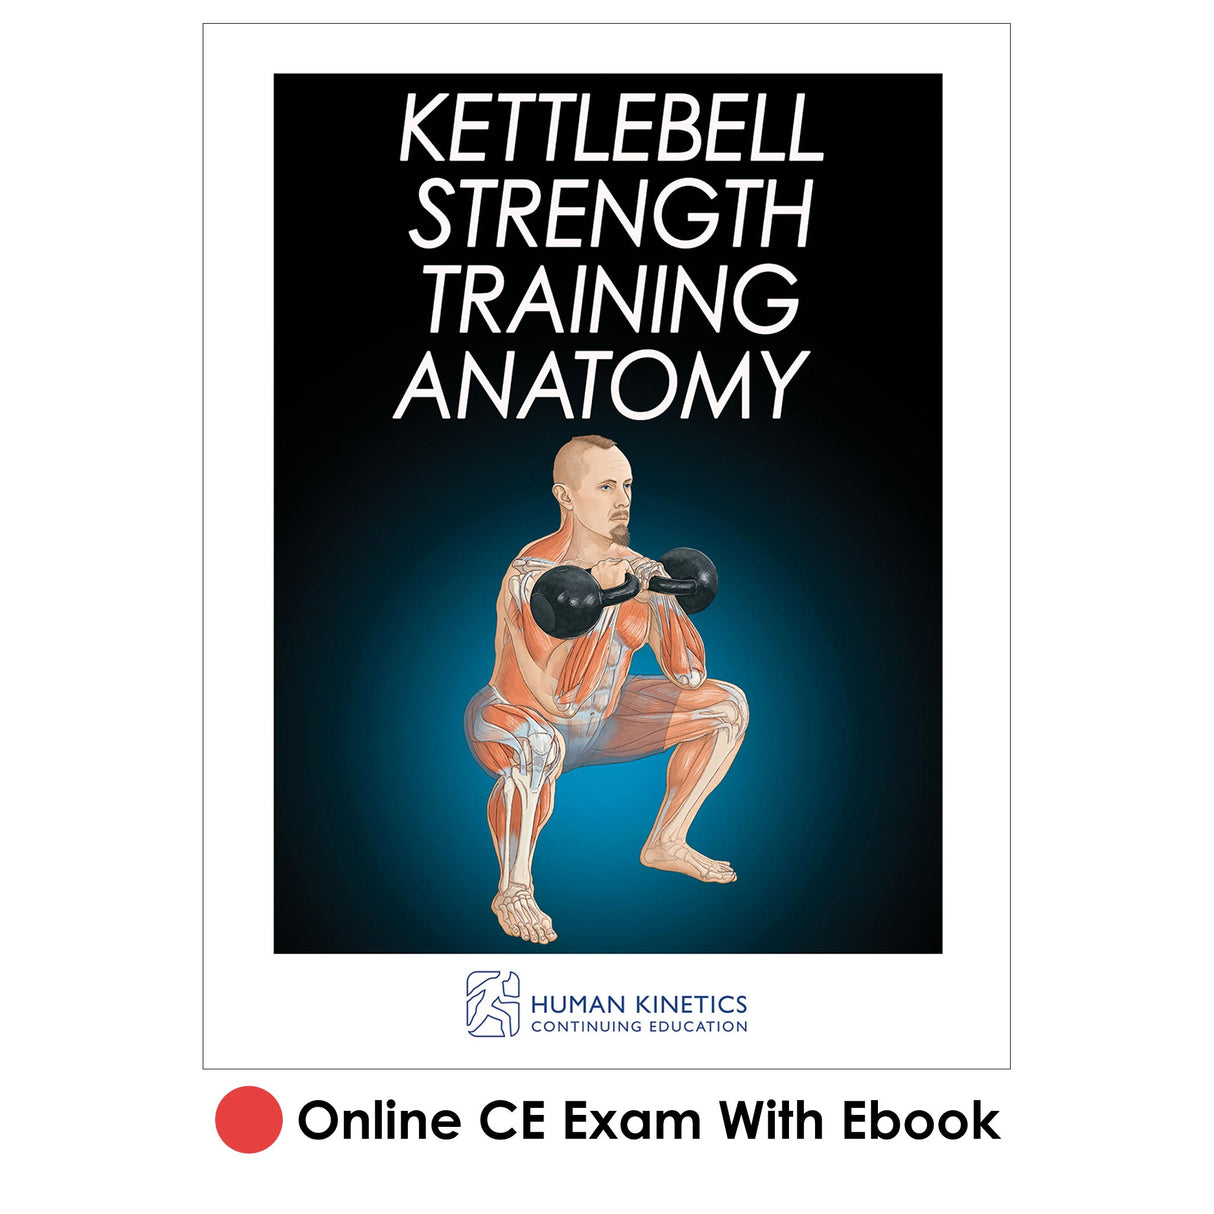 Kettlebell Strength Training Anatomy Online CE Exam With Ebook